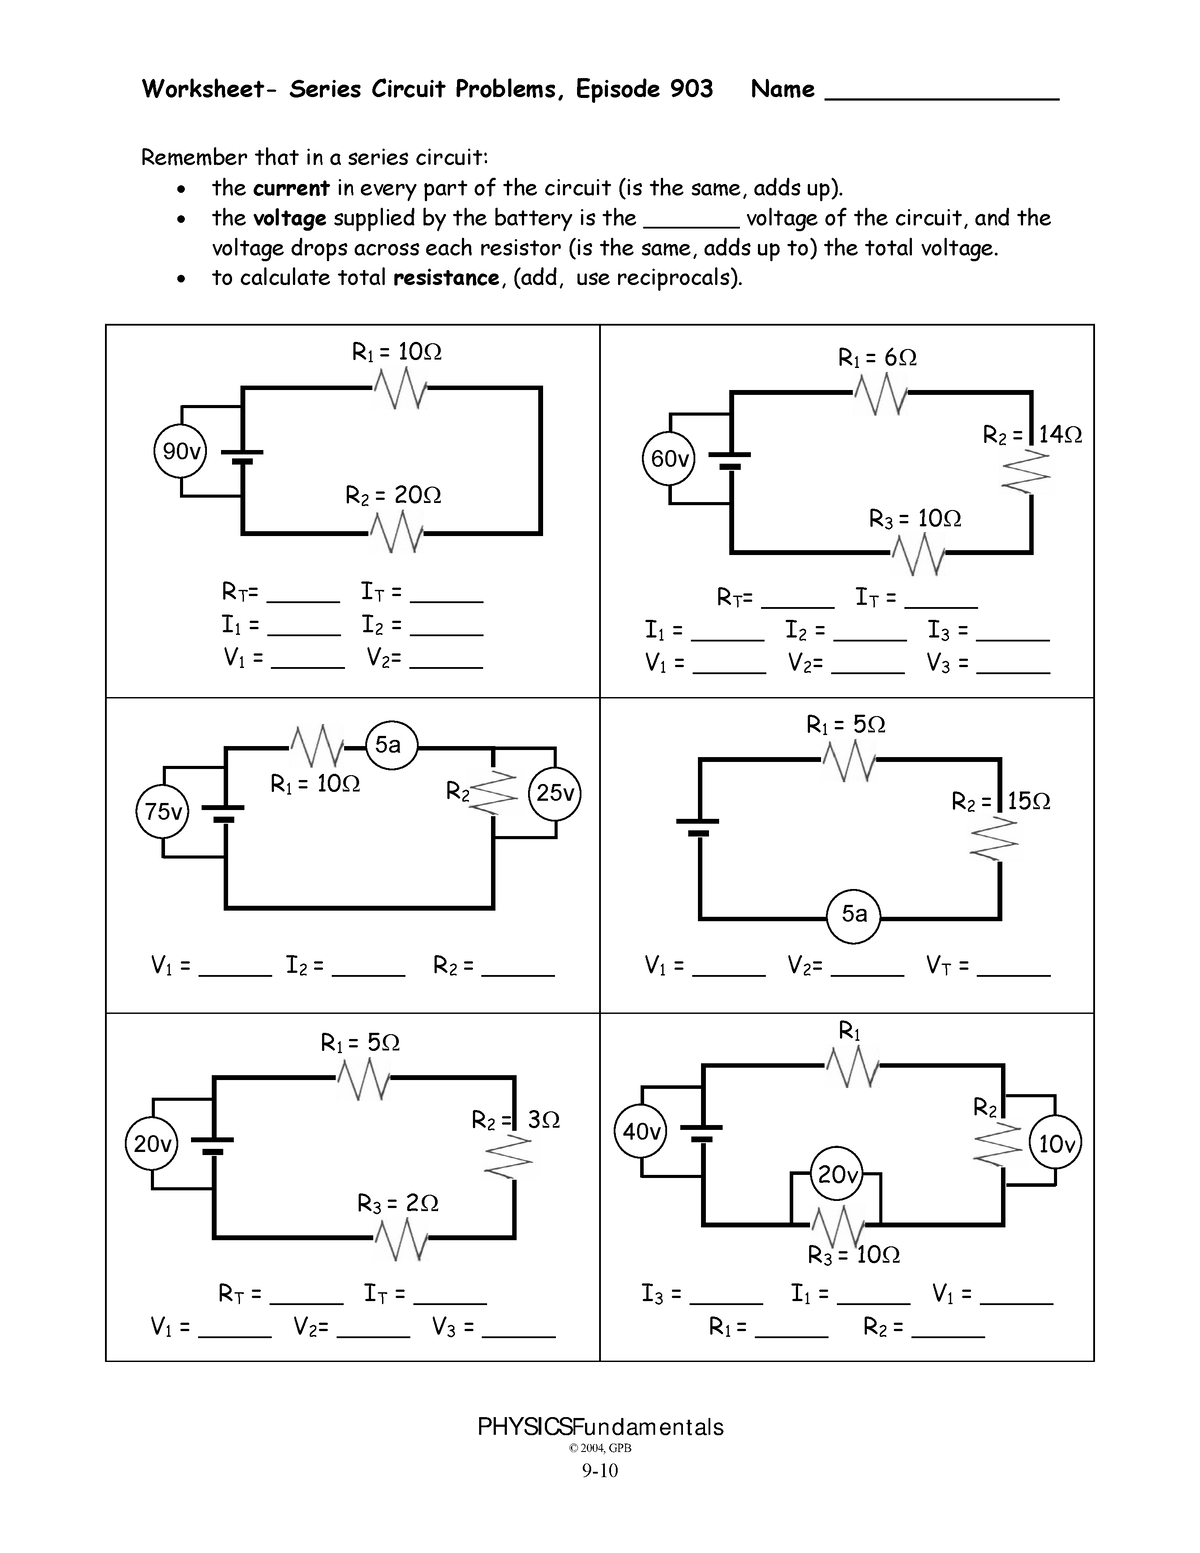 Series Circuit Problems Wkst Worksheet Series Circuit Problems Episode 903 Name 